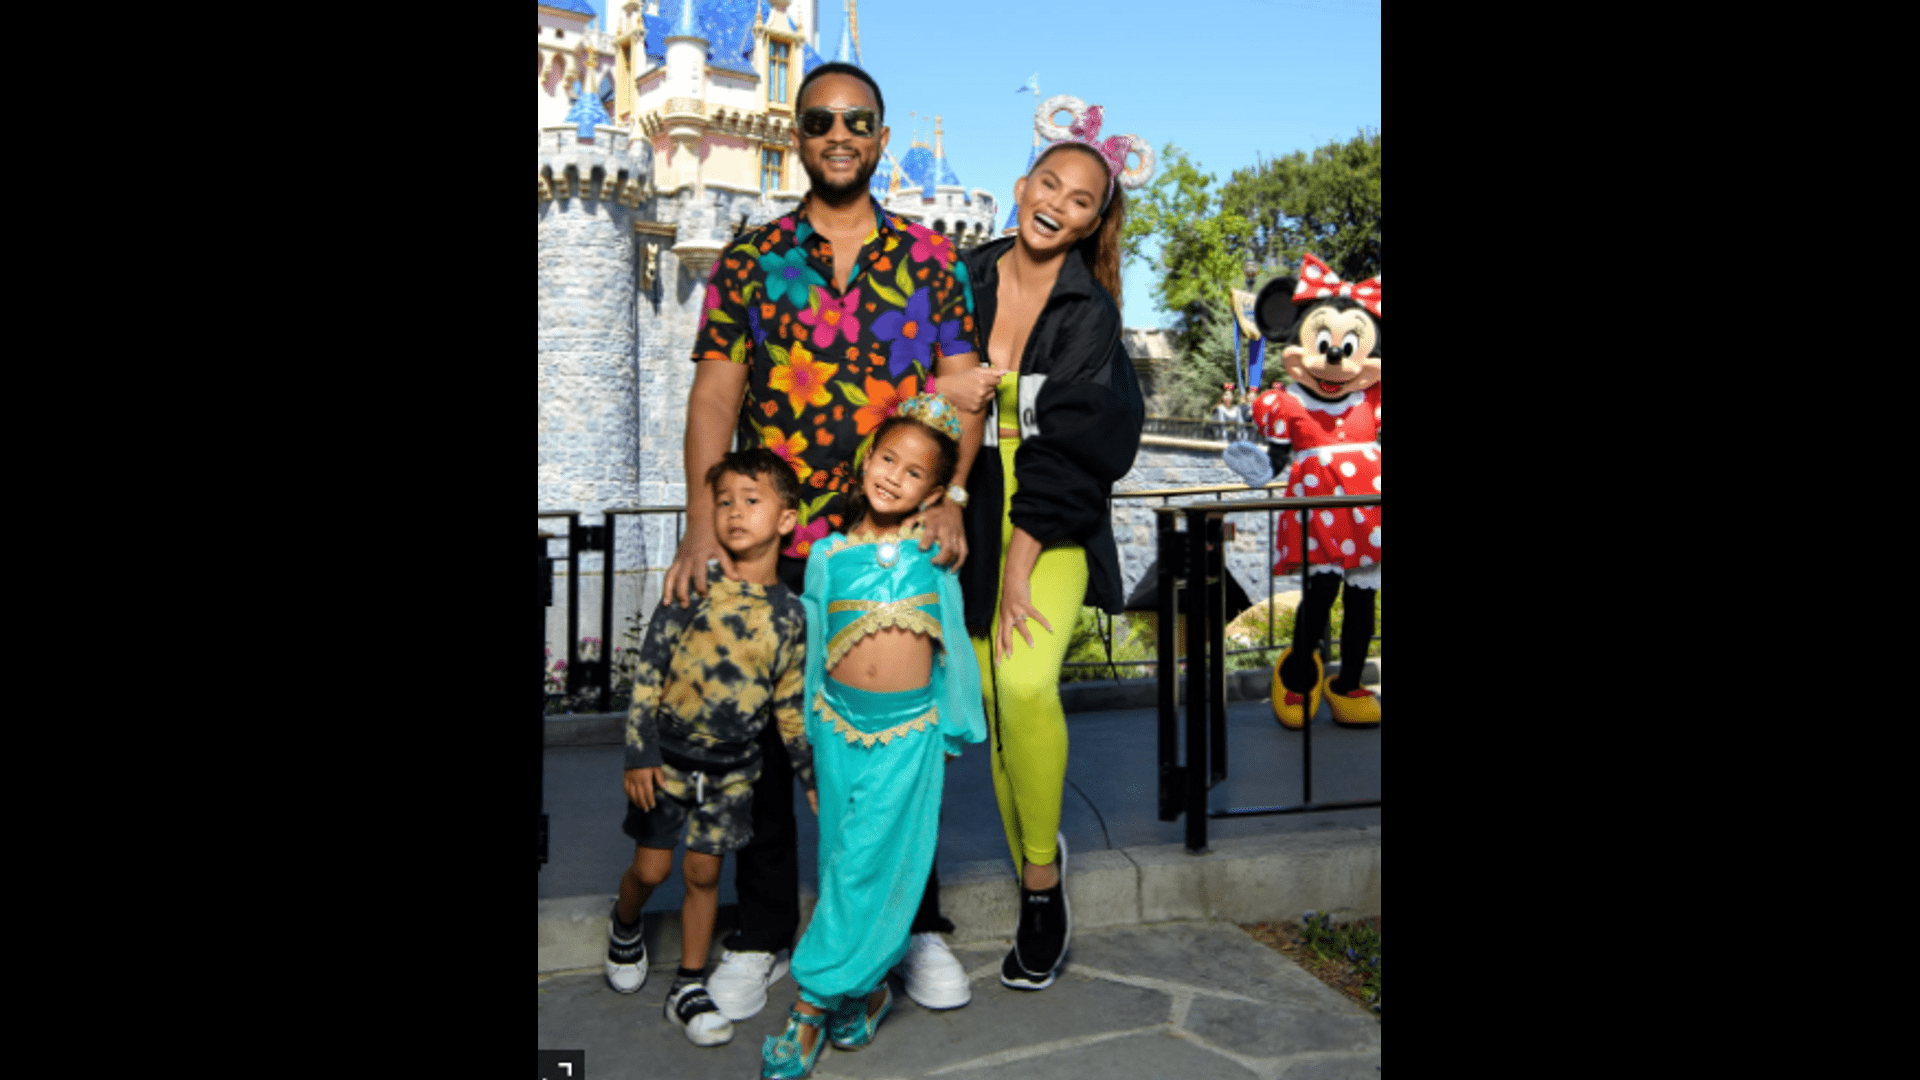 Chrissy Teigen and John Legend celebrate their daughter's 6th birthday at Disneyland